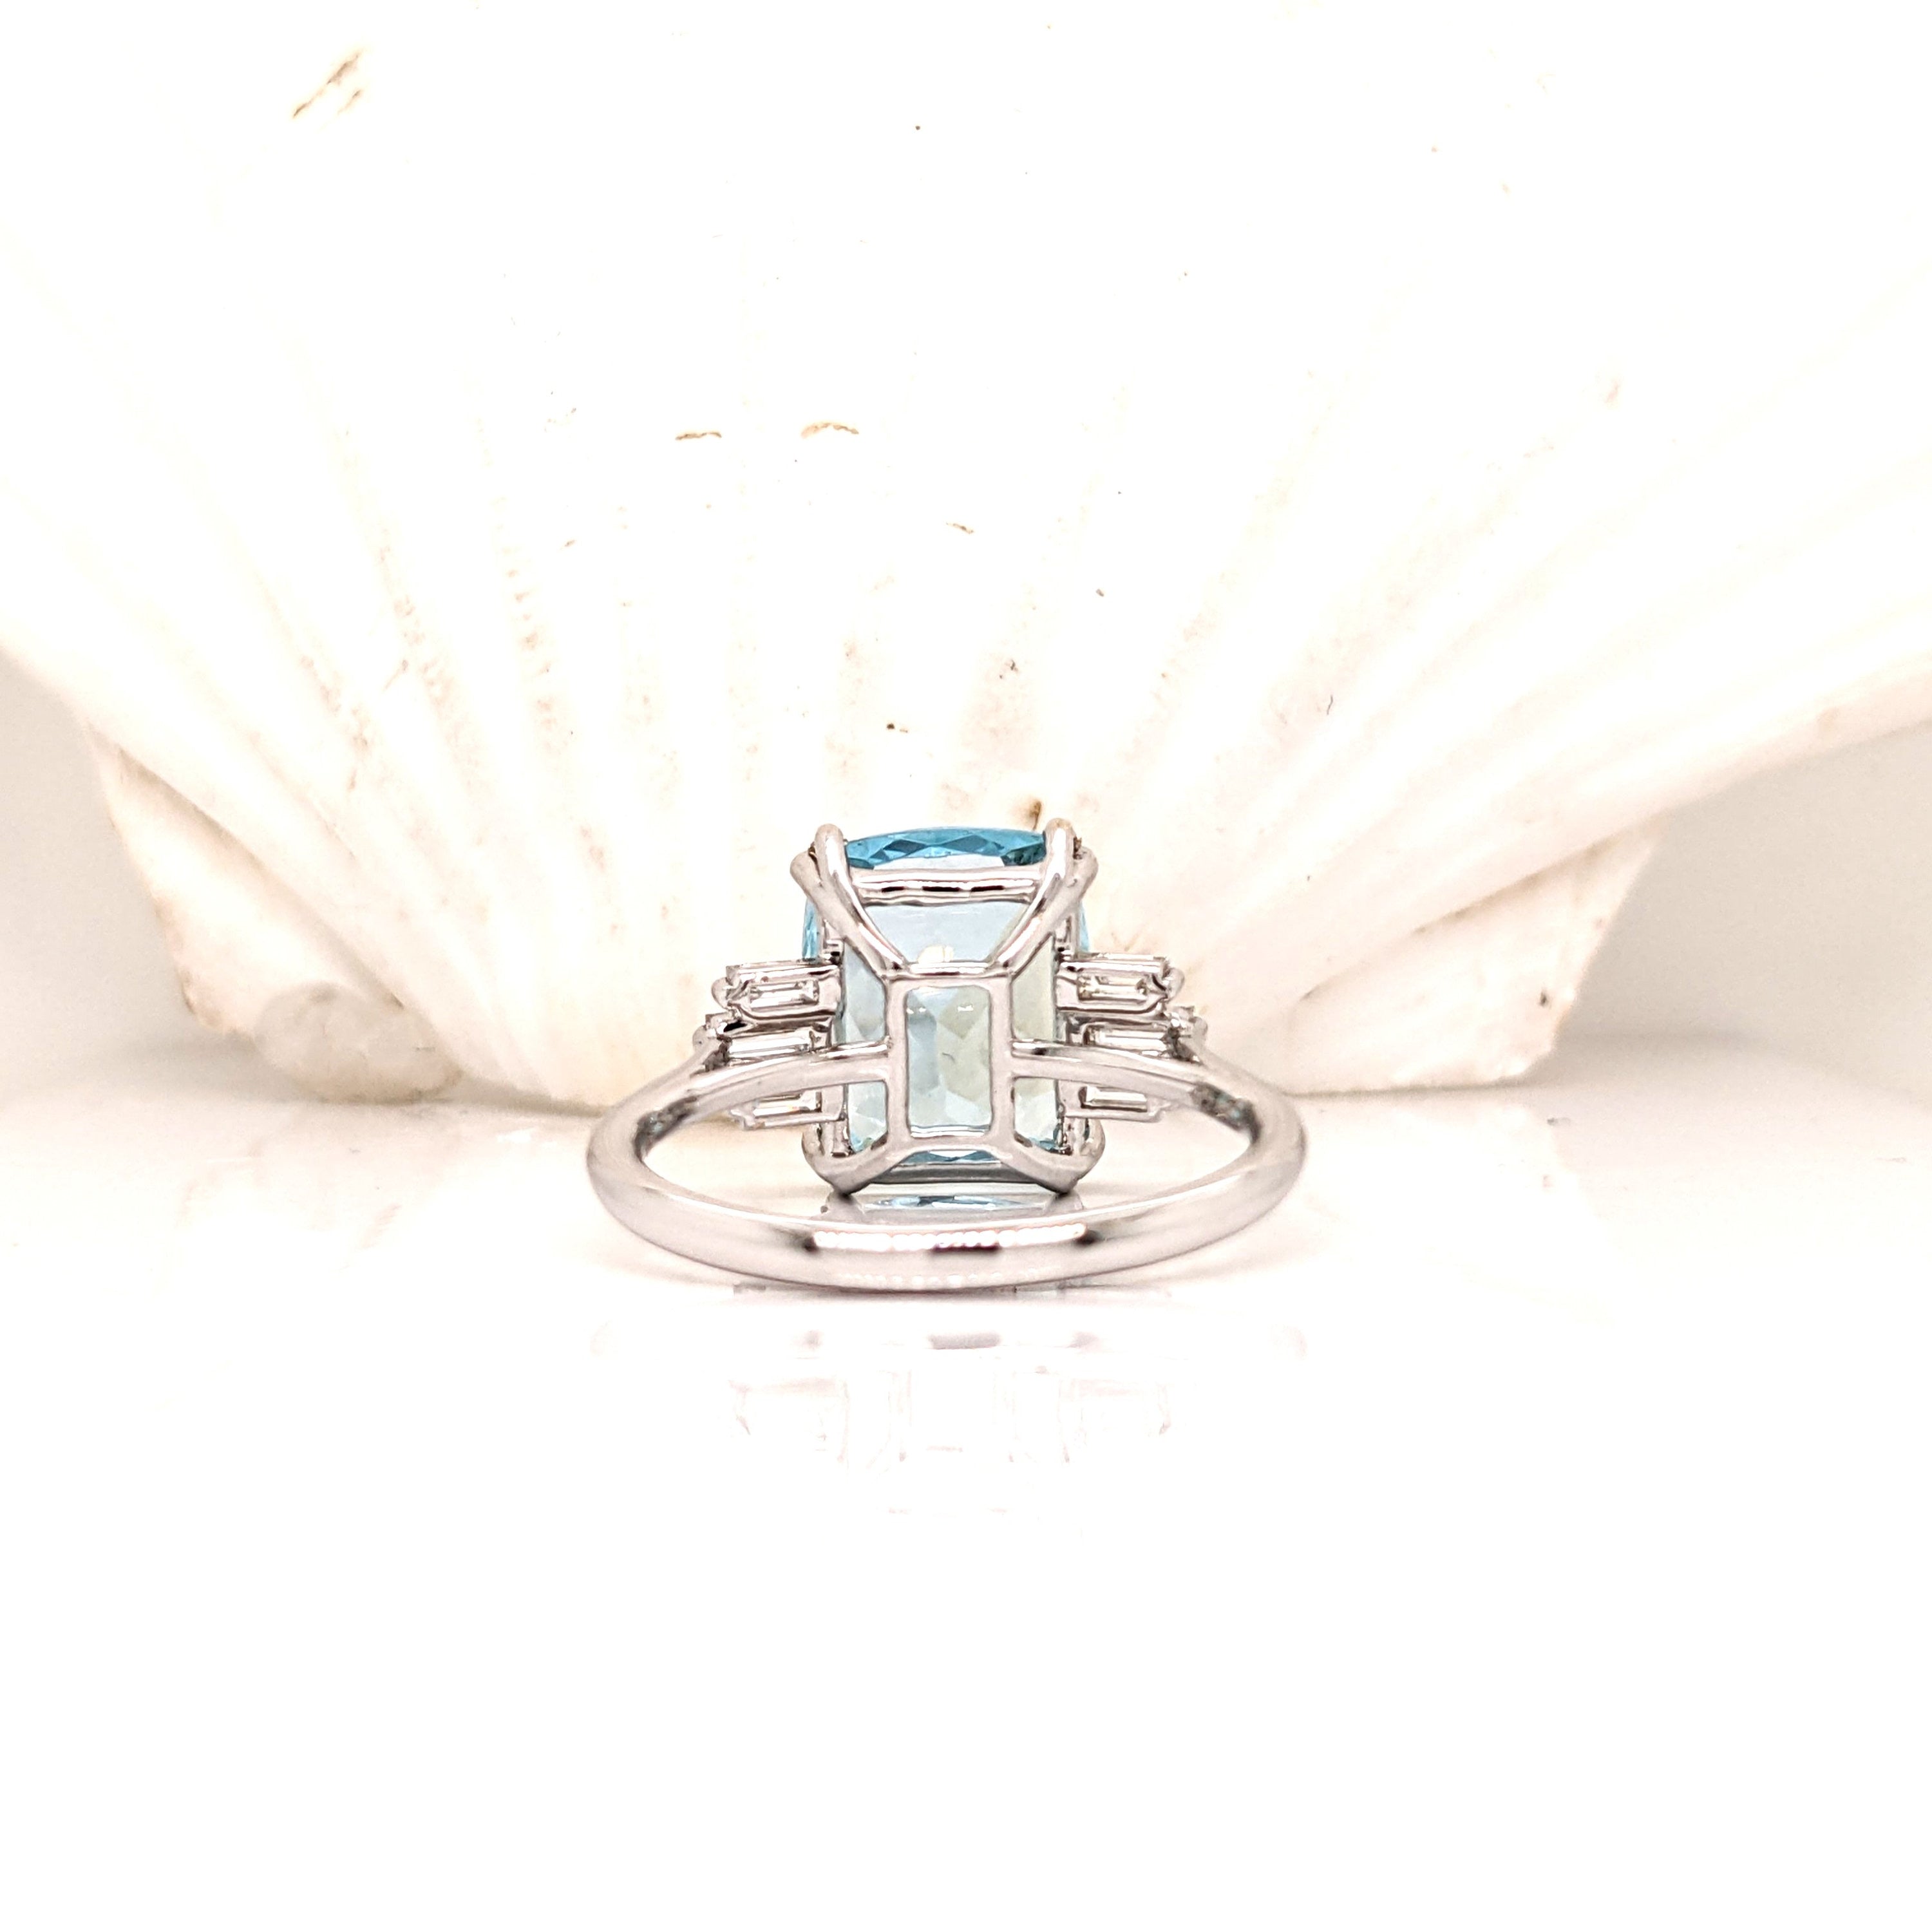 Aqua Blue Natural Aquamarine Ring in 14k Gold w Baguette Diamond Accents | Emerald Cut 10x8mm | Modern Style | March Birthstone | Statement